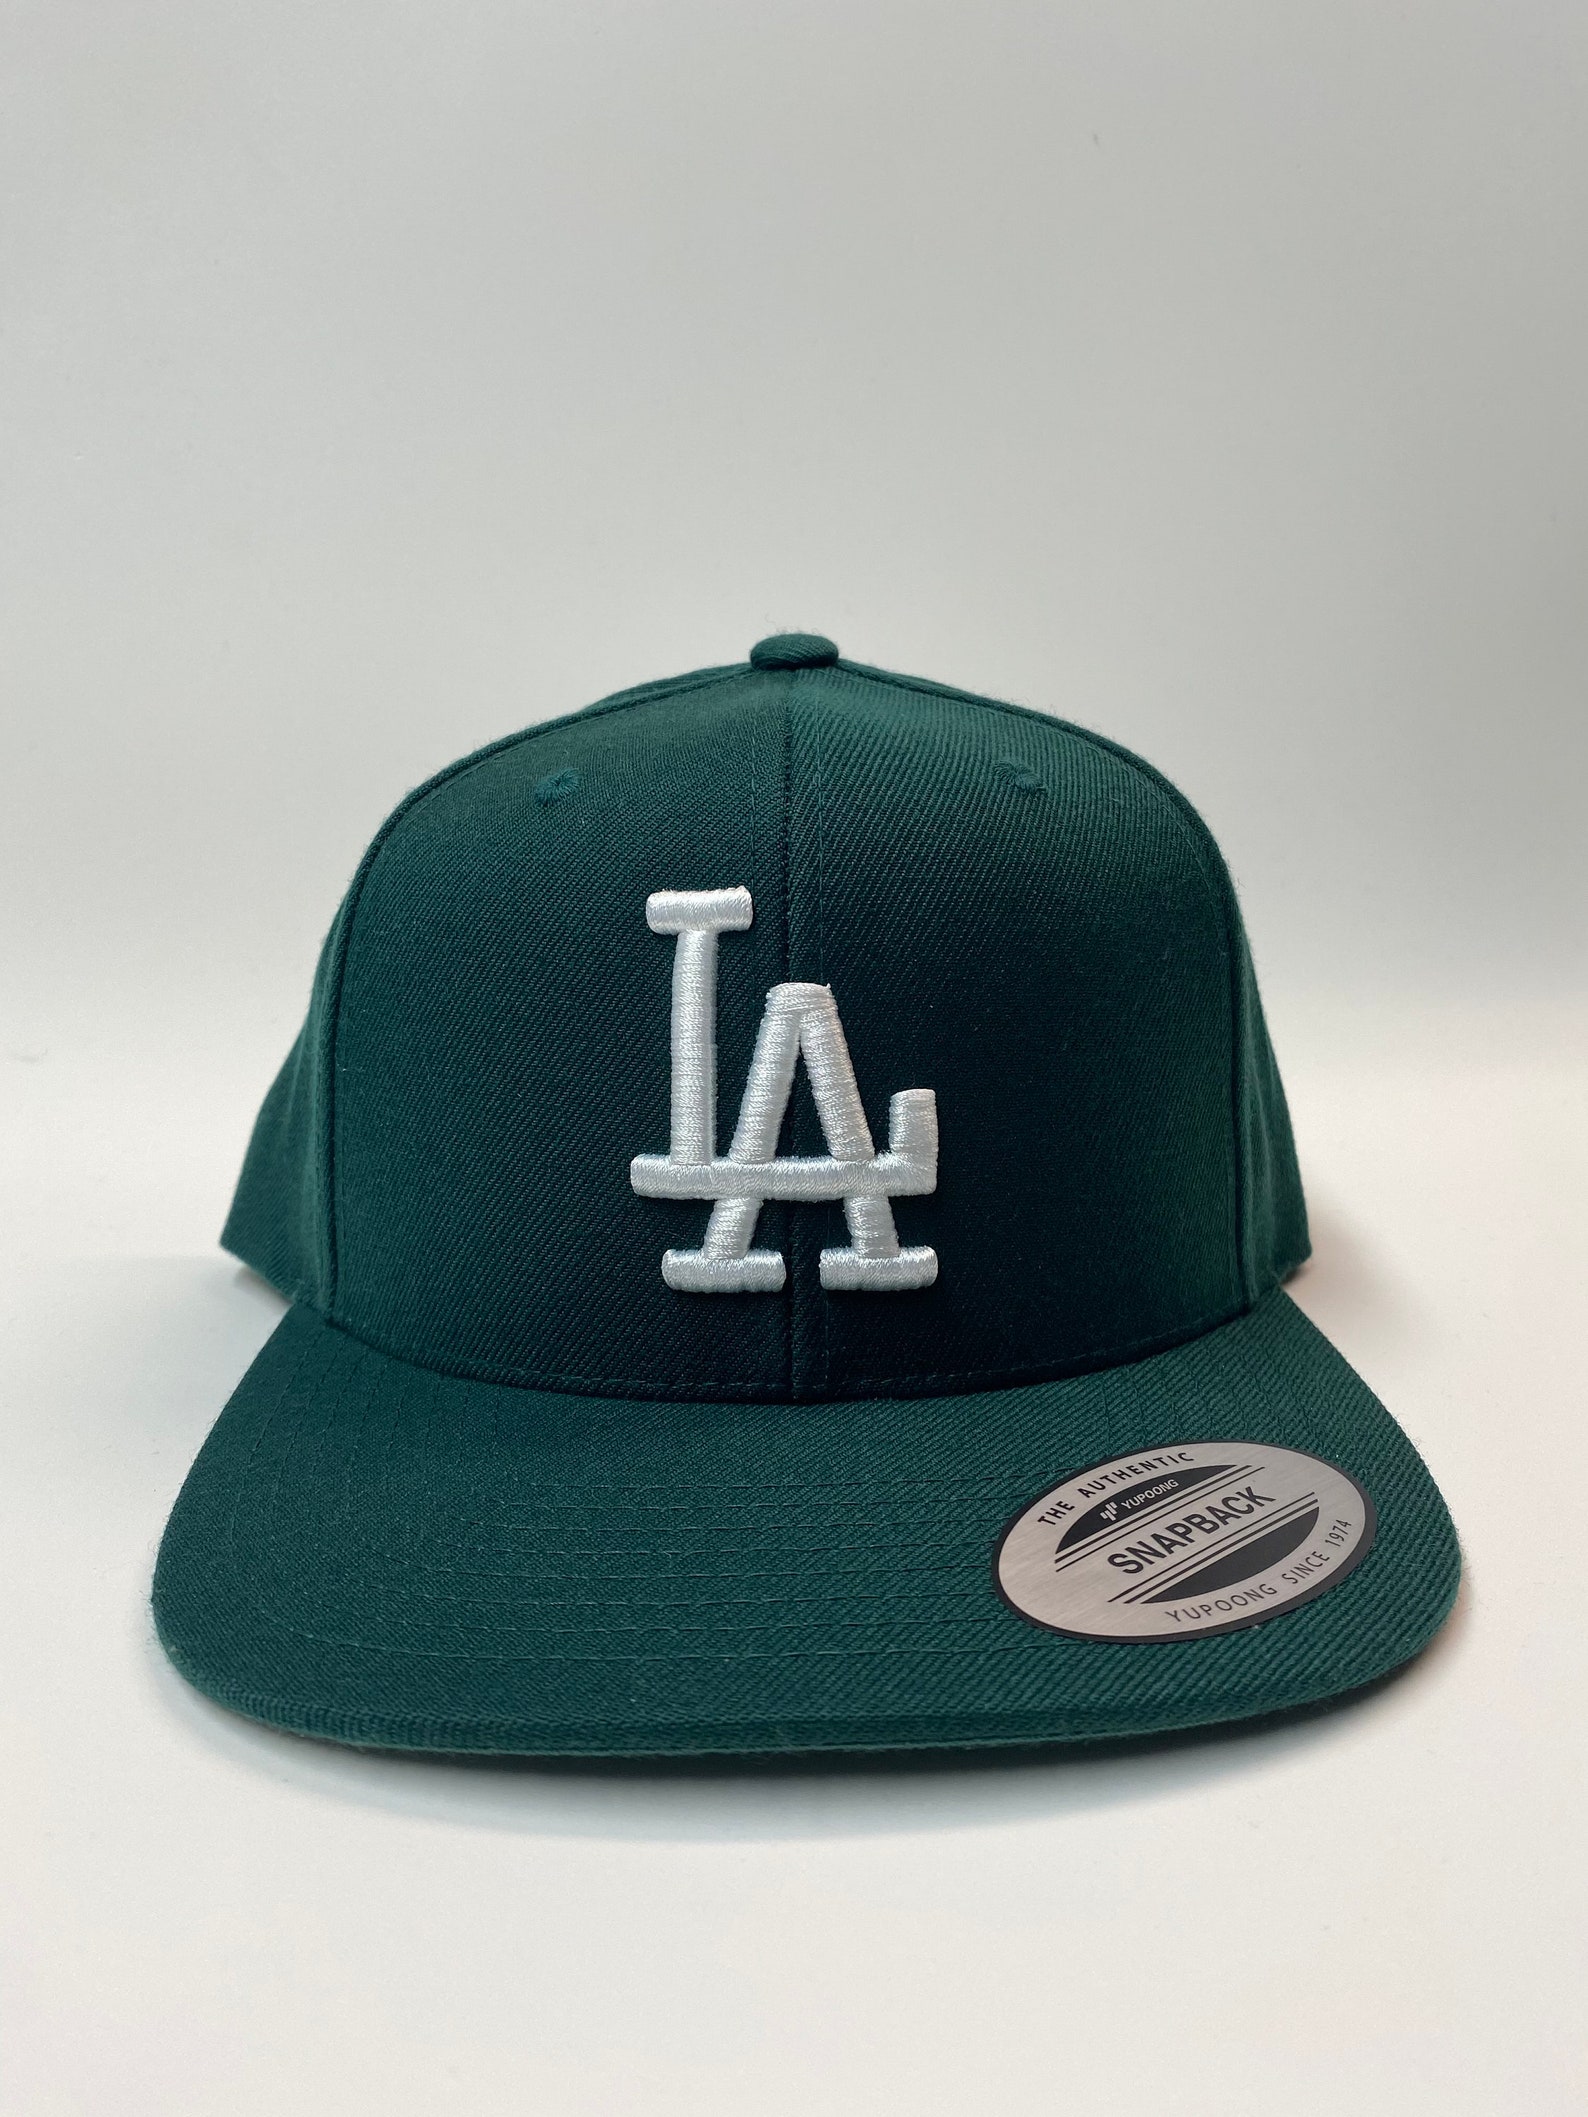 LA Los Angeles cap baseball cap basketball cap think blue LA | Etsy